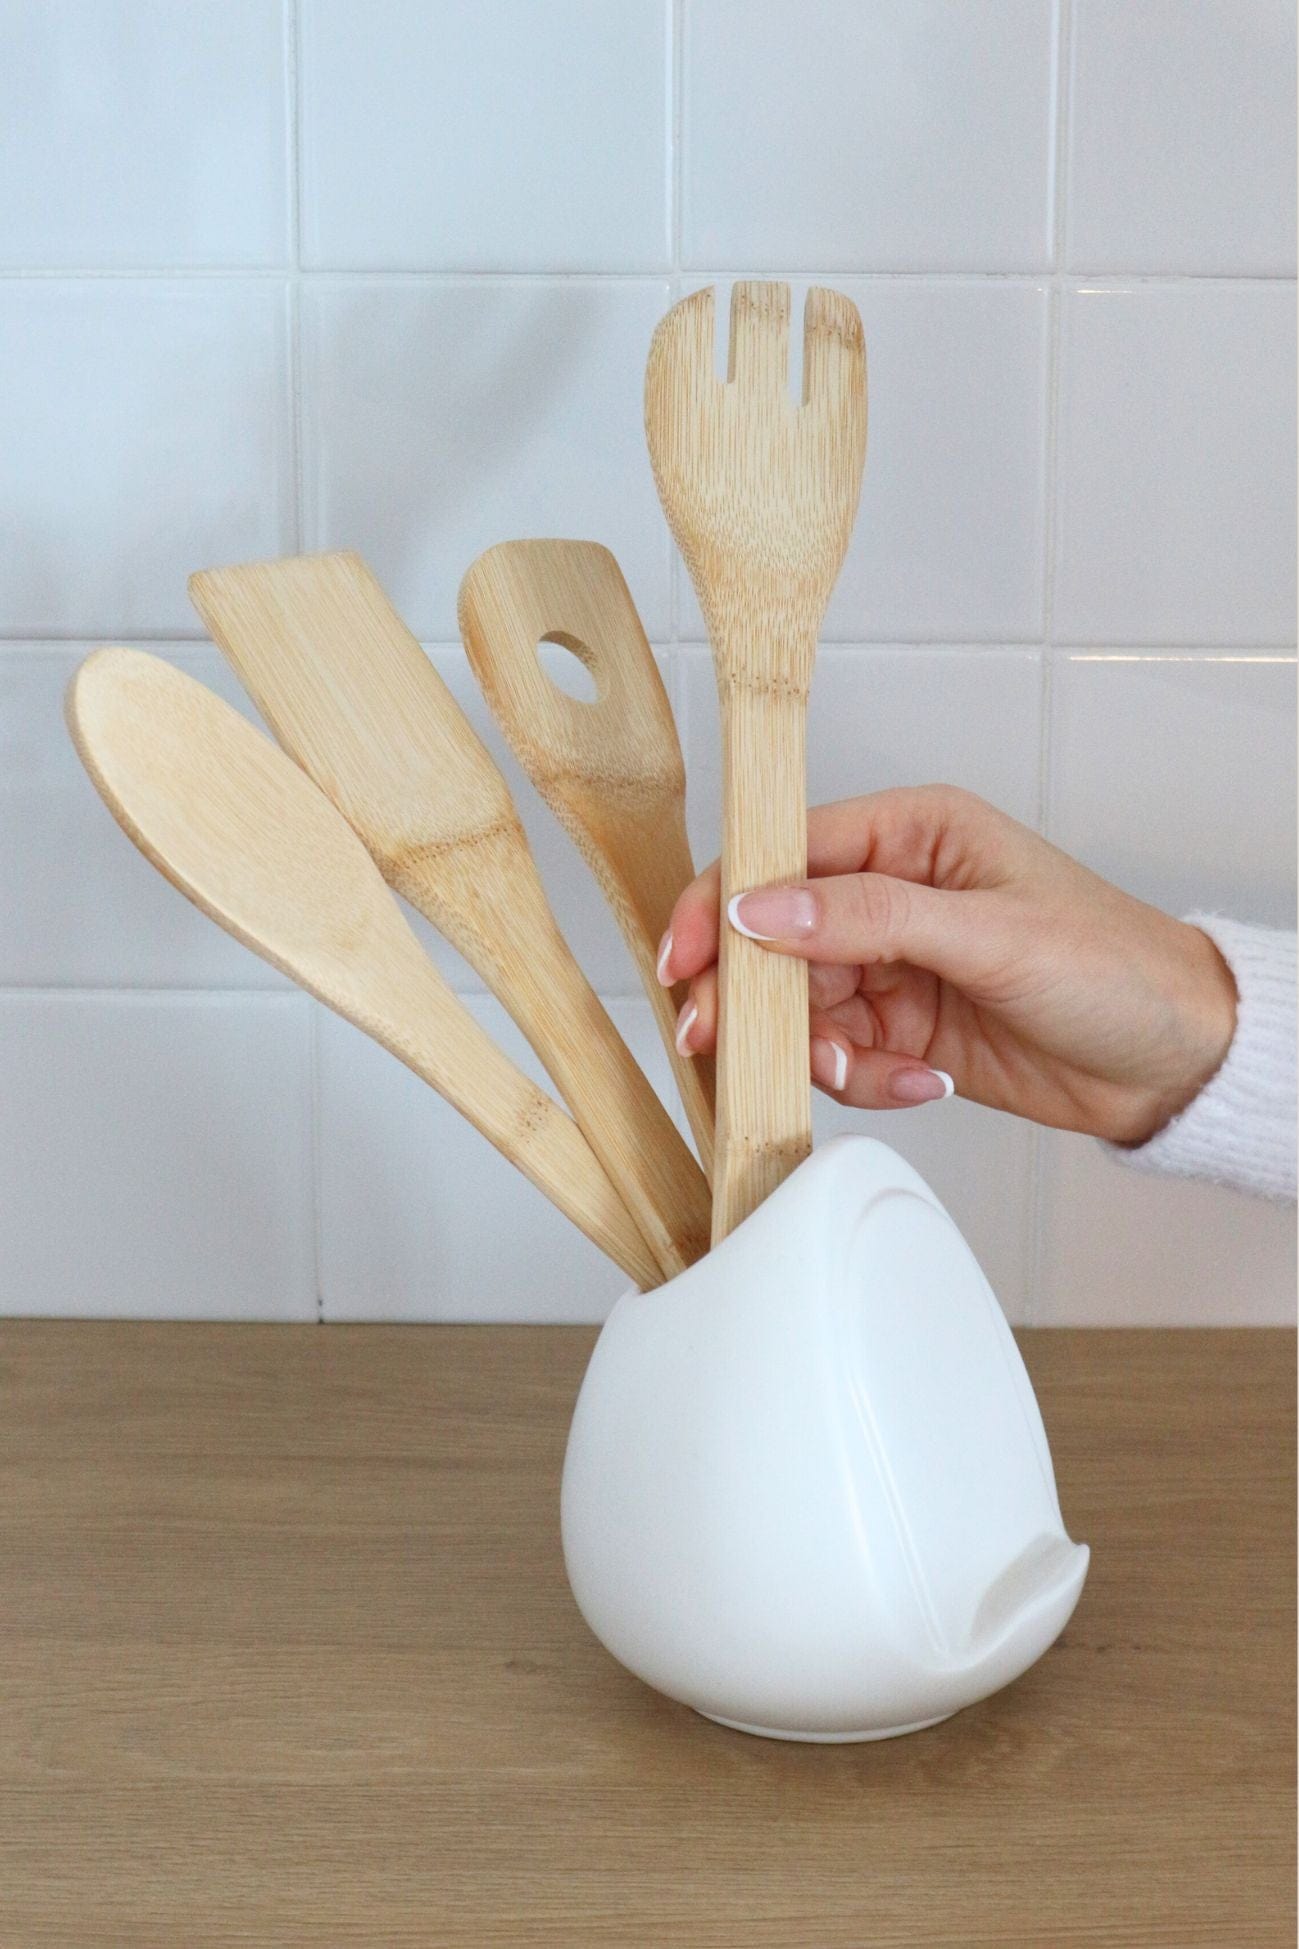 Item International Joseph Joseph - Set di 4 utensili da cucina e portautensili in ceramica bianca | Item International